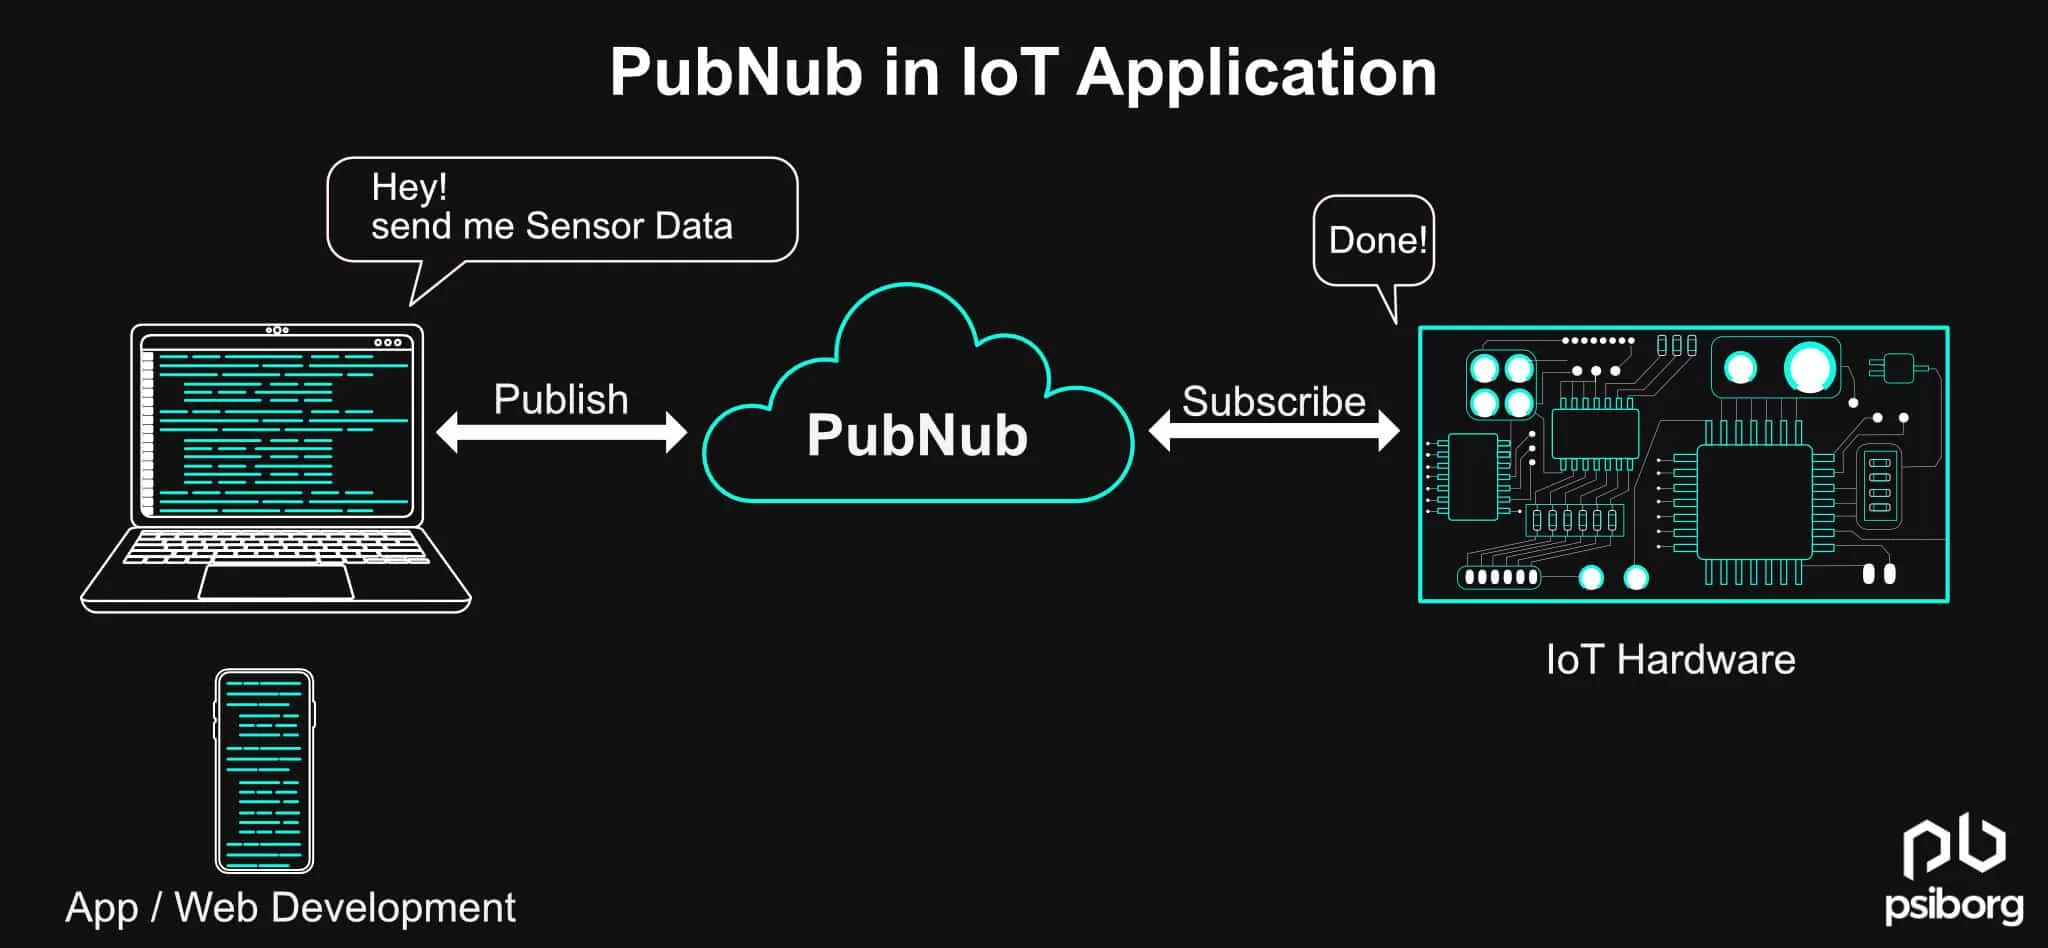 PubNub based IoT application